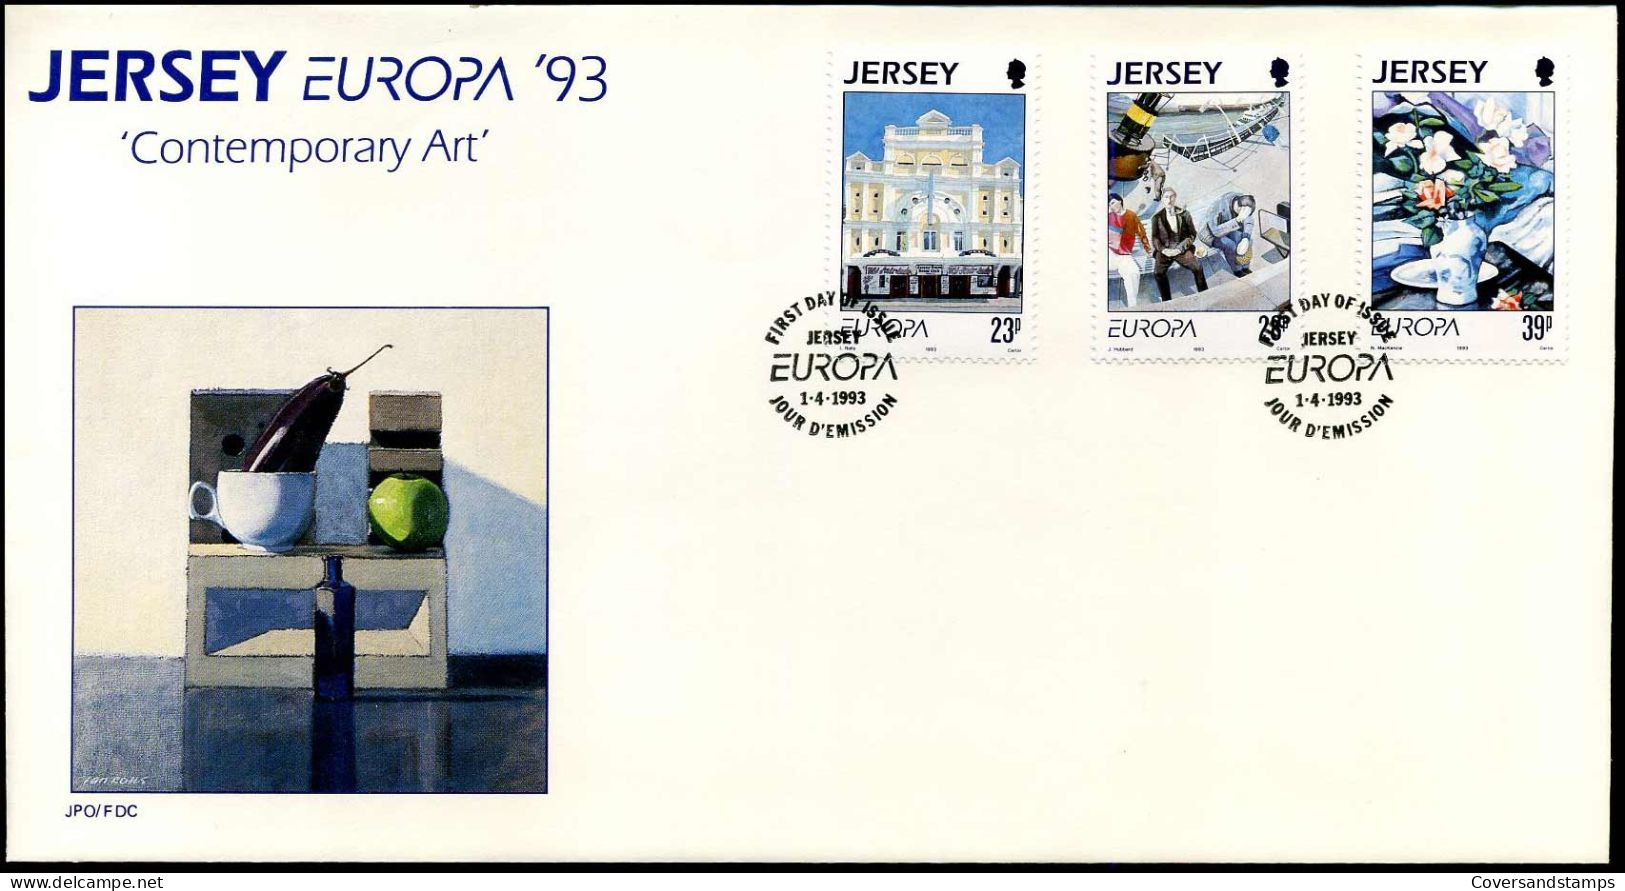 Jersey - FDC - Europa CEPT 1993 - Contemporary Art - 1993